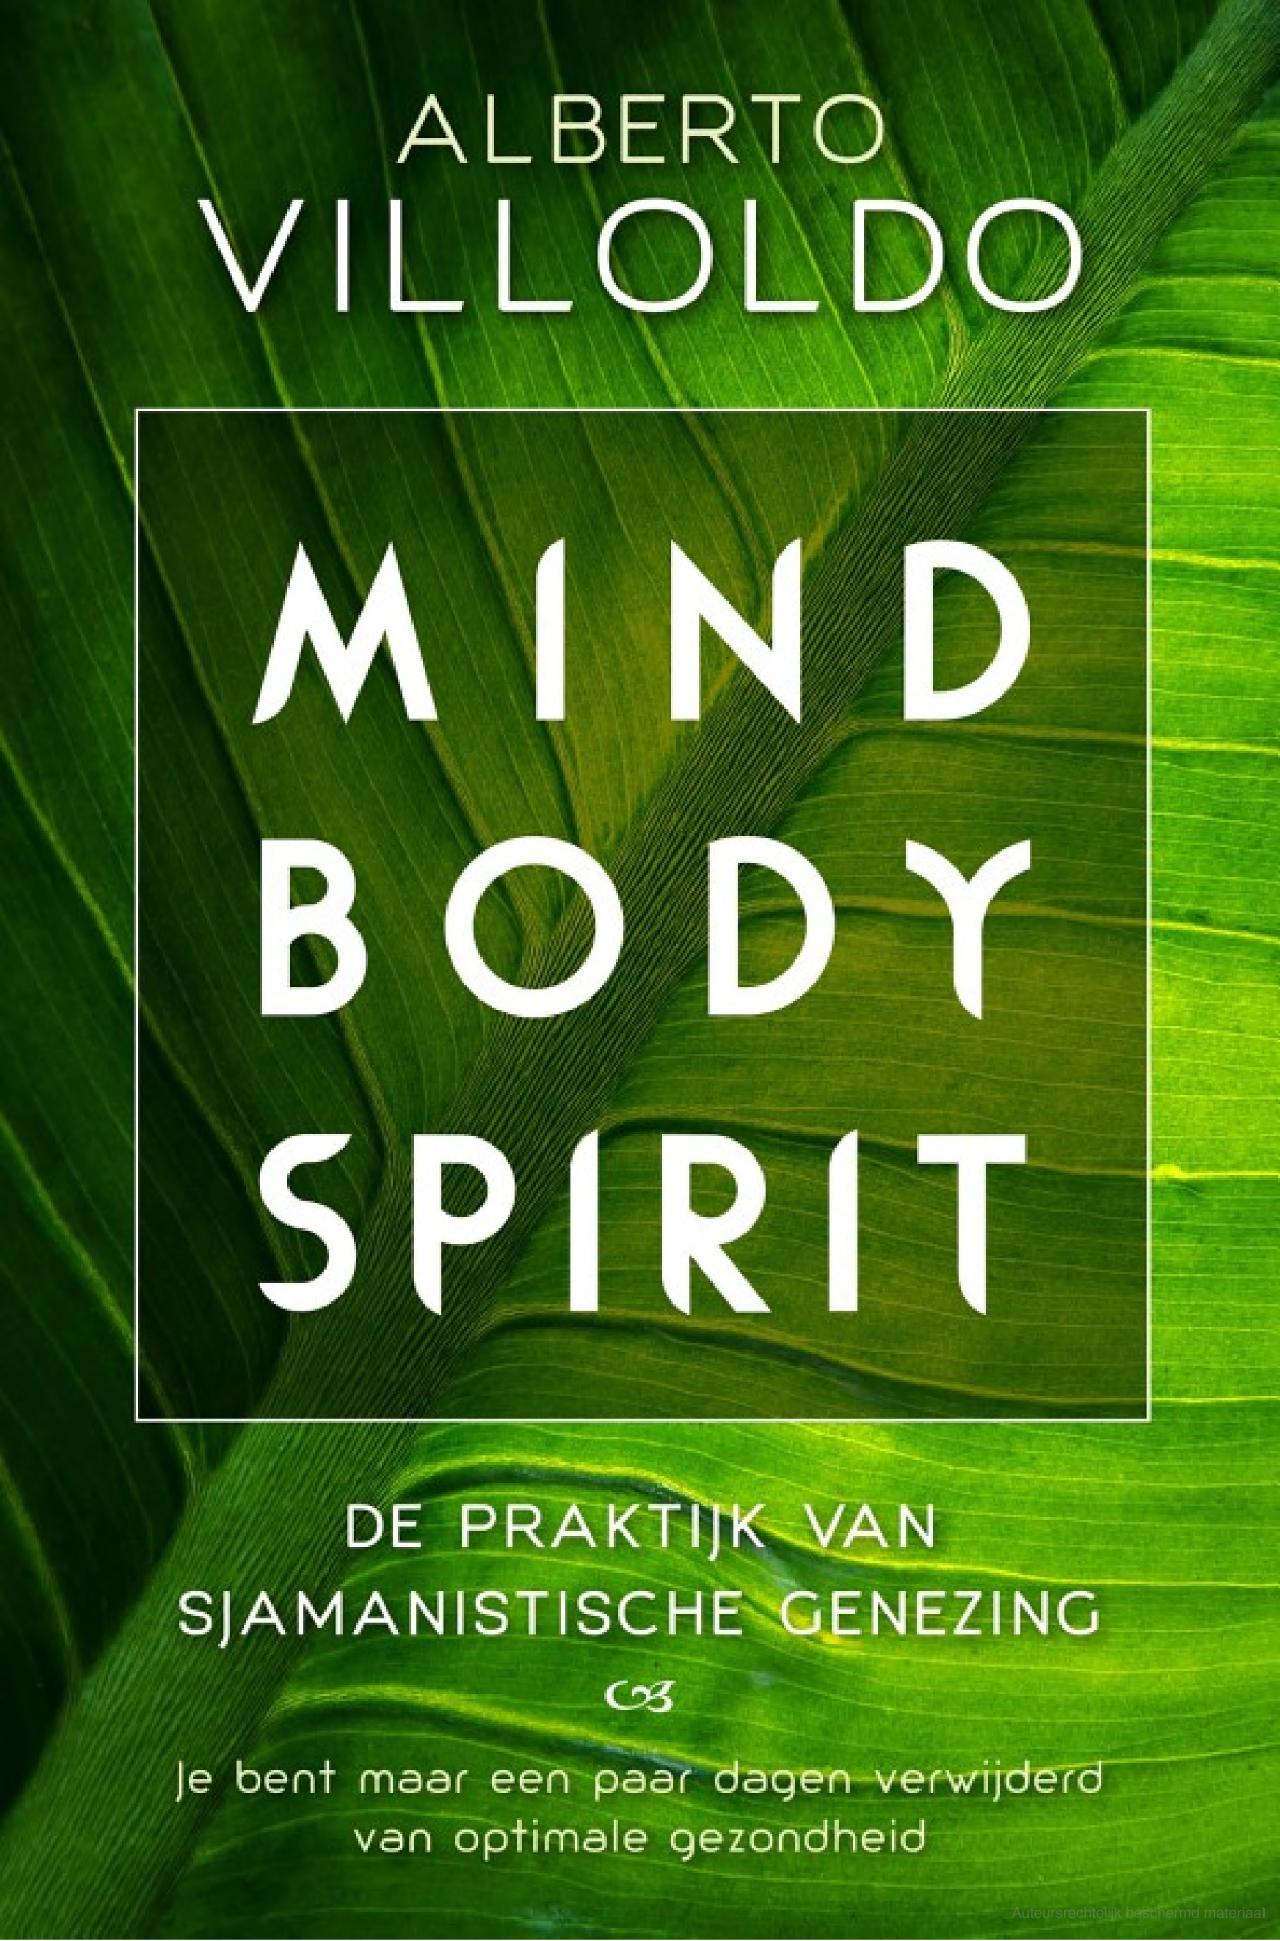 Mind Body Spirit ( Alberto Villildo)